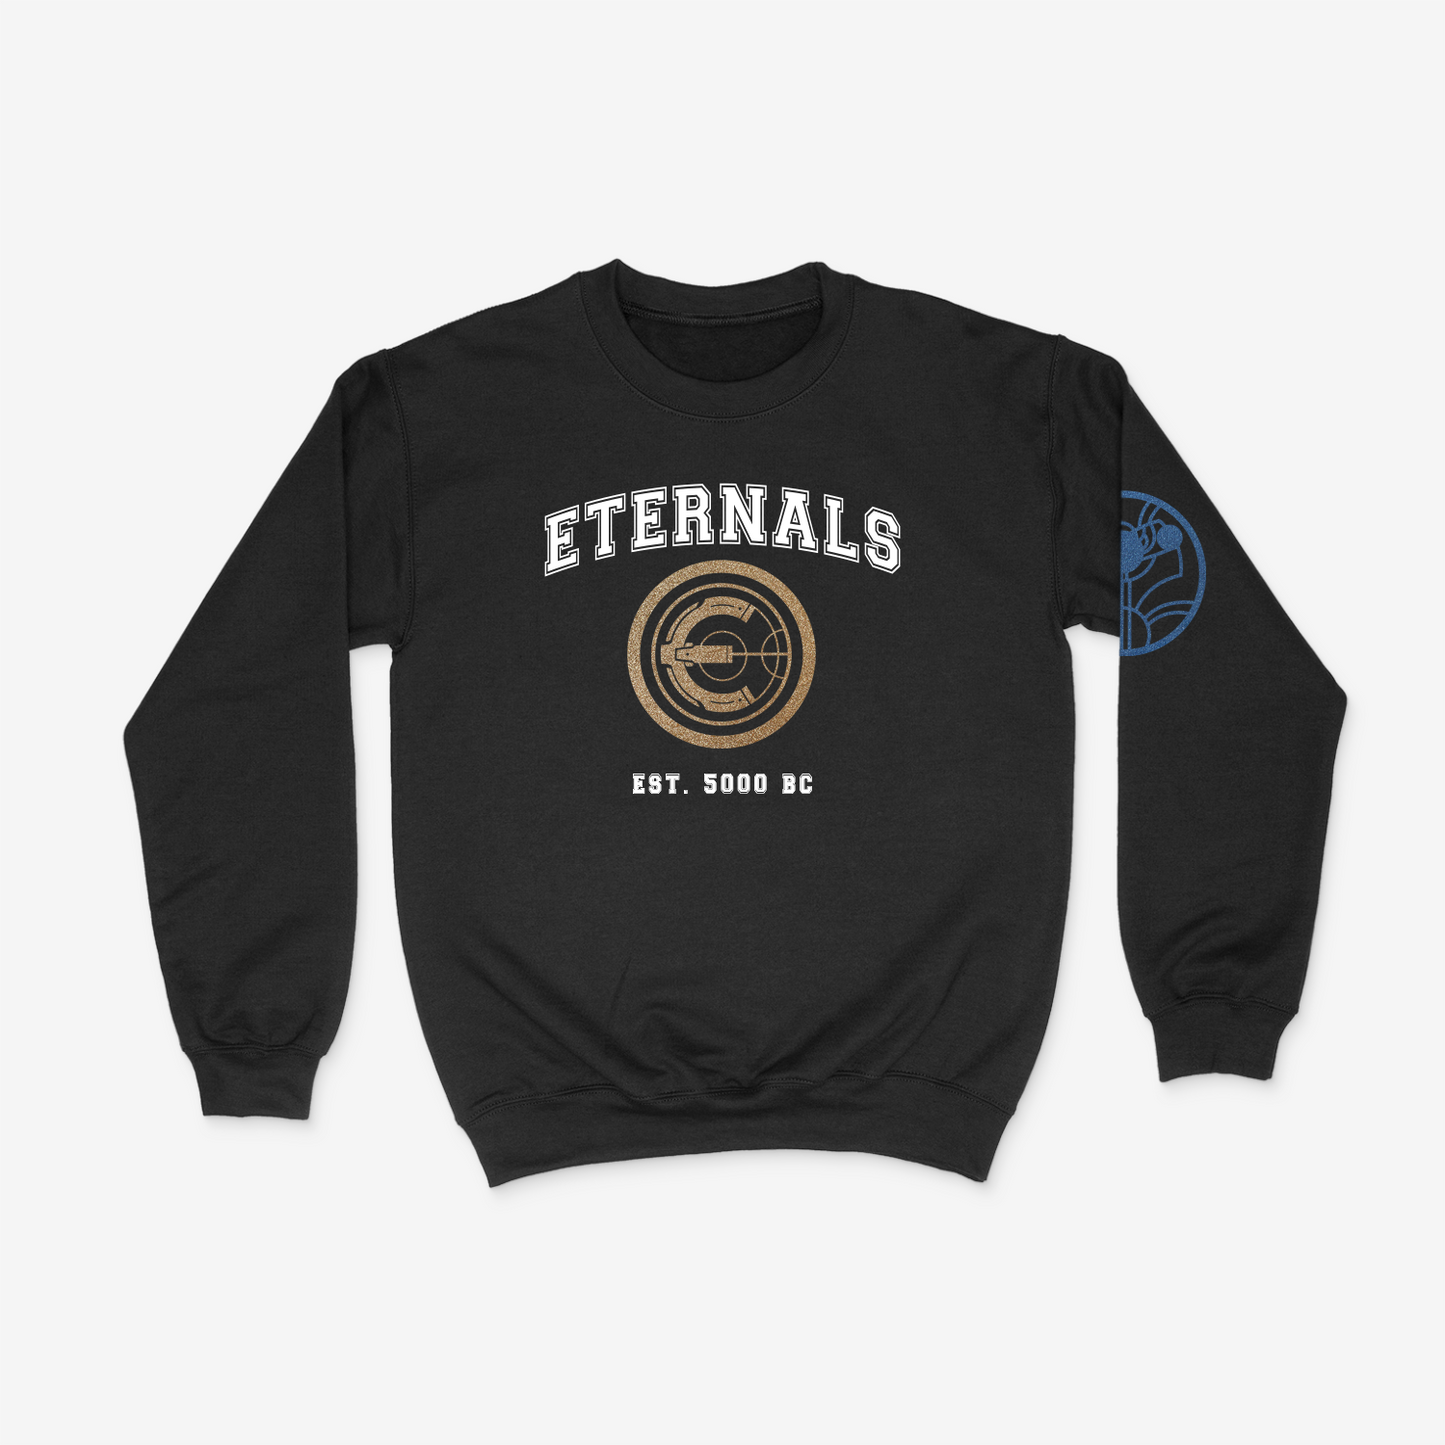 Eternals Varsity Crewneck Sweater - Black